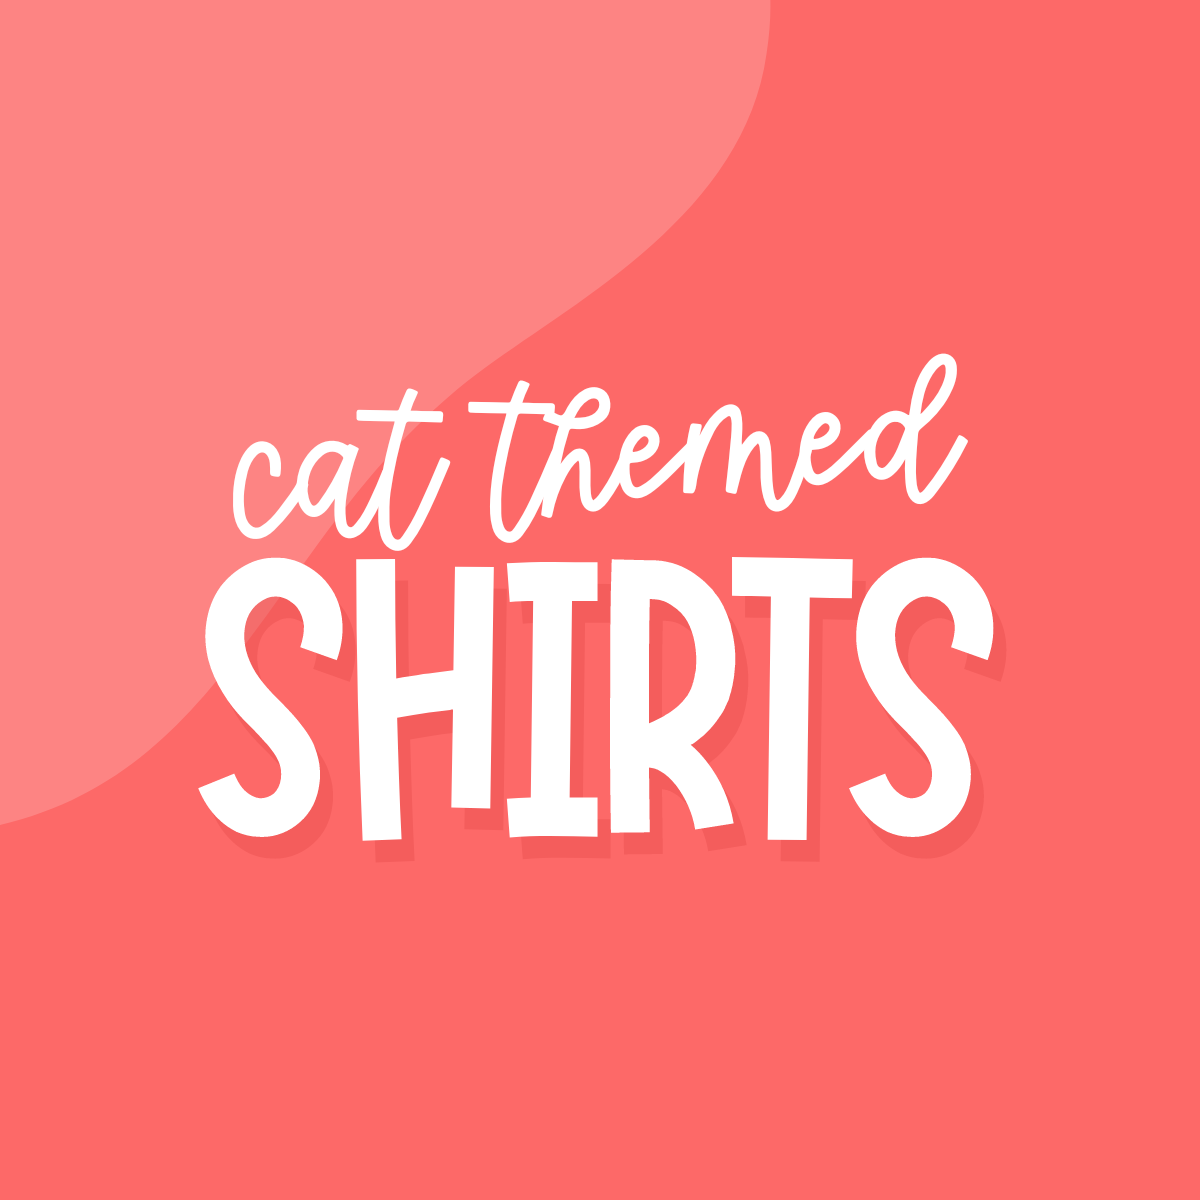 Cat Themed Shirts